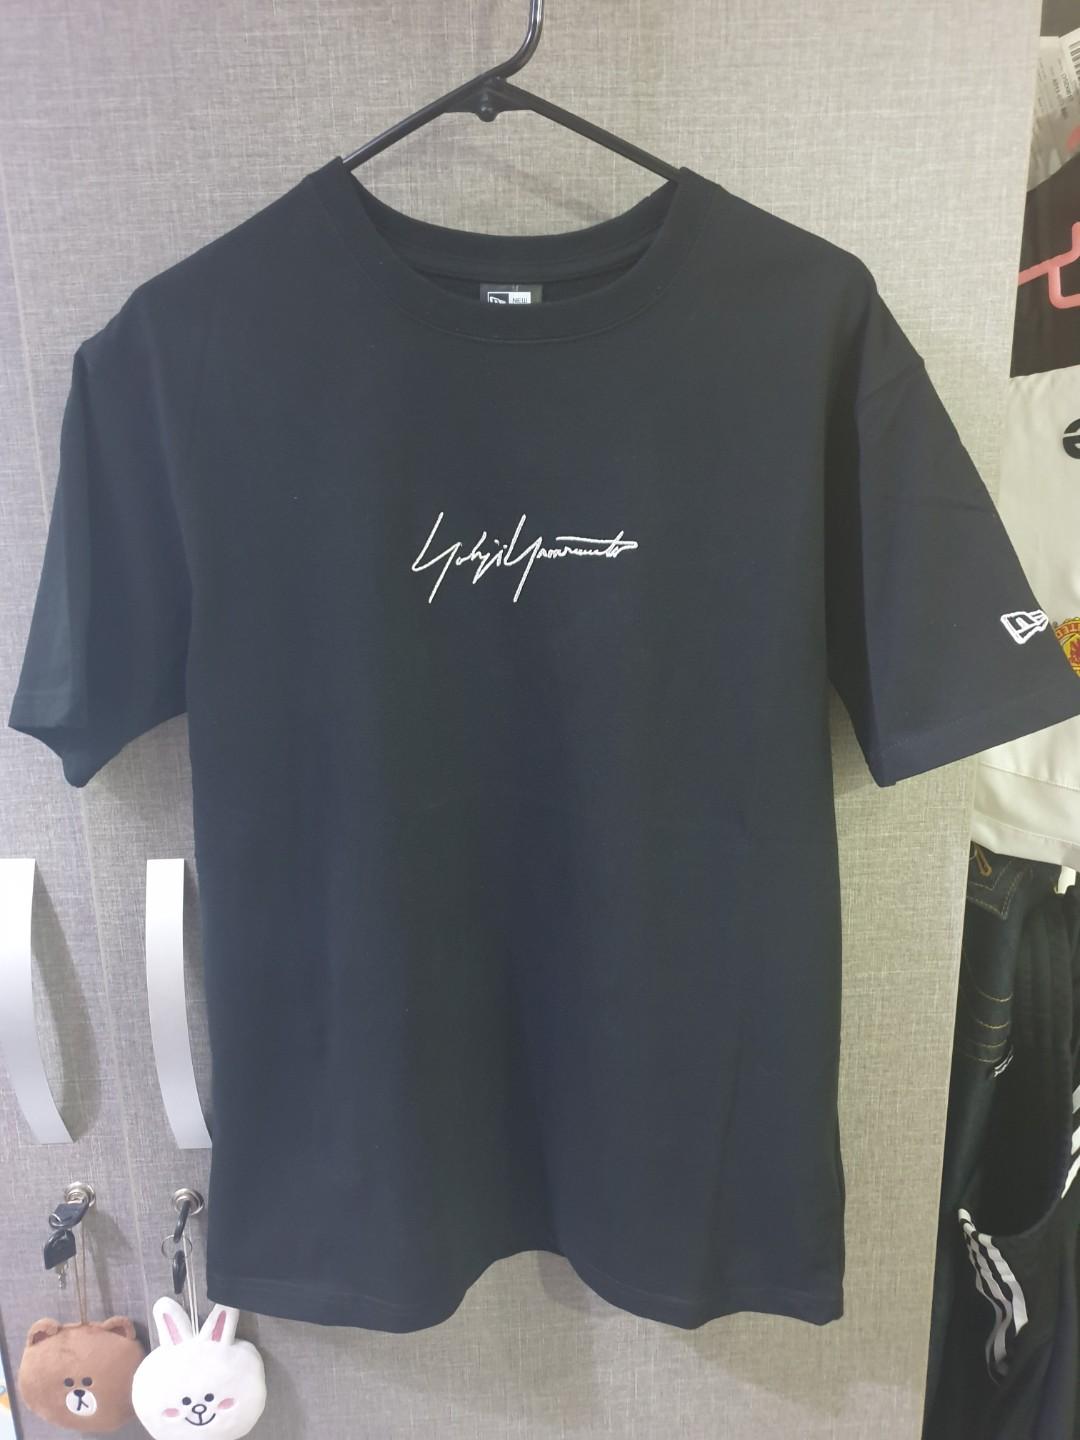 Yohji Yamamoto x New Era Signature T- Shirt (Large Left), Men's 